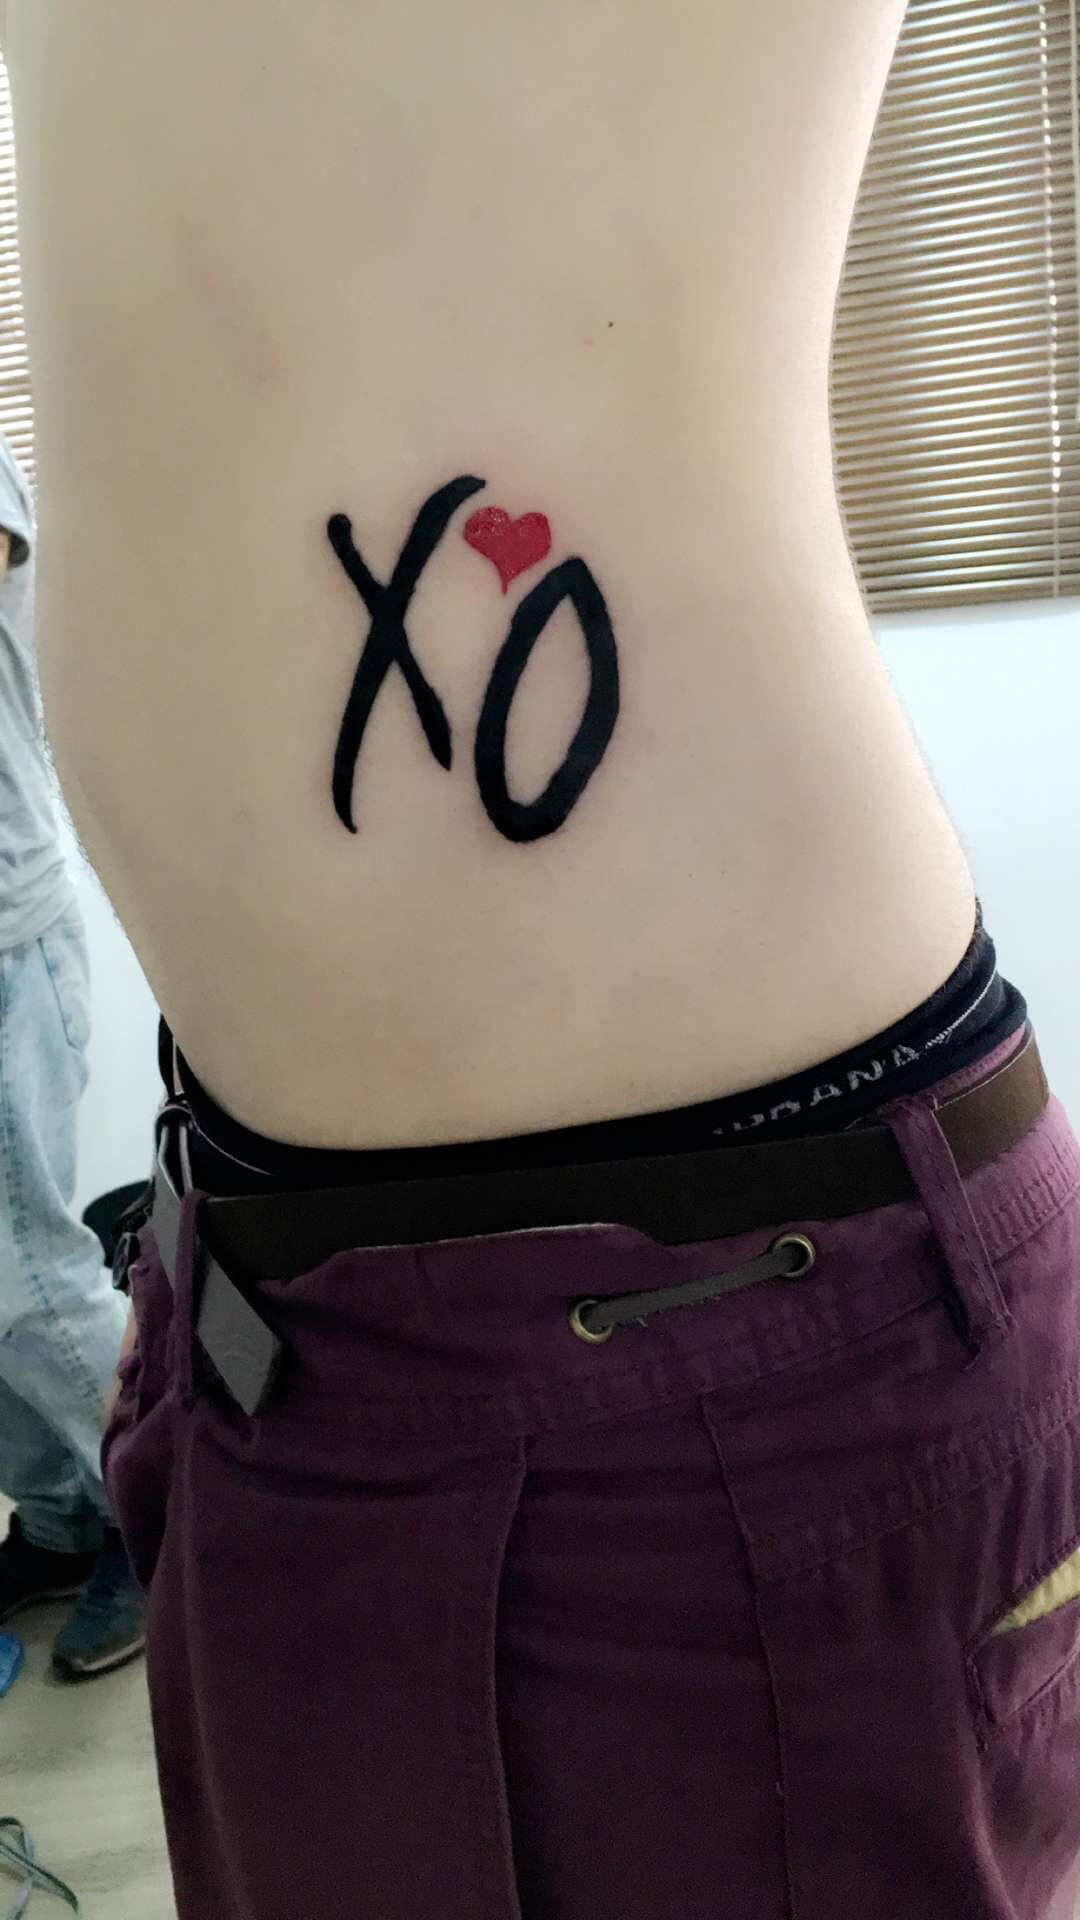 xo-tattoos-23